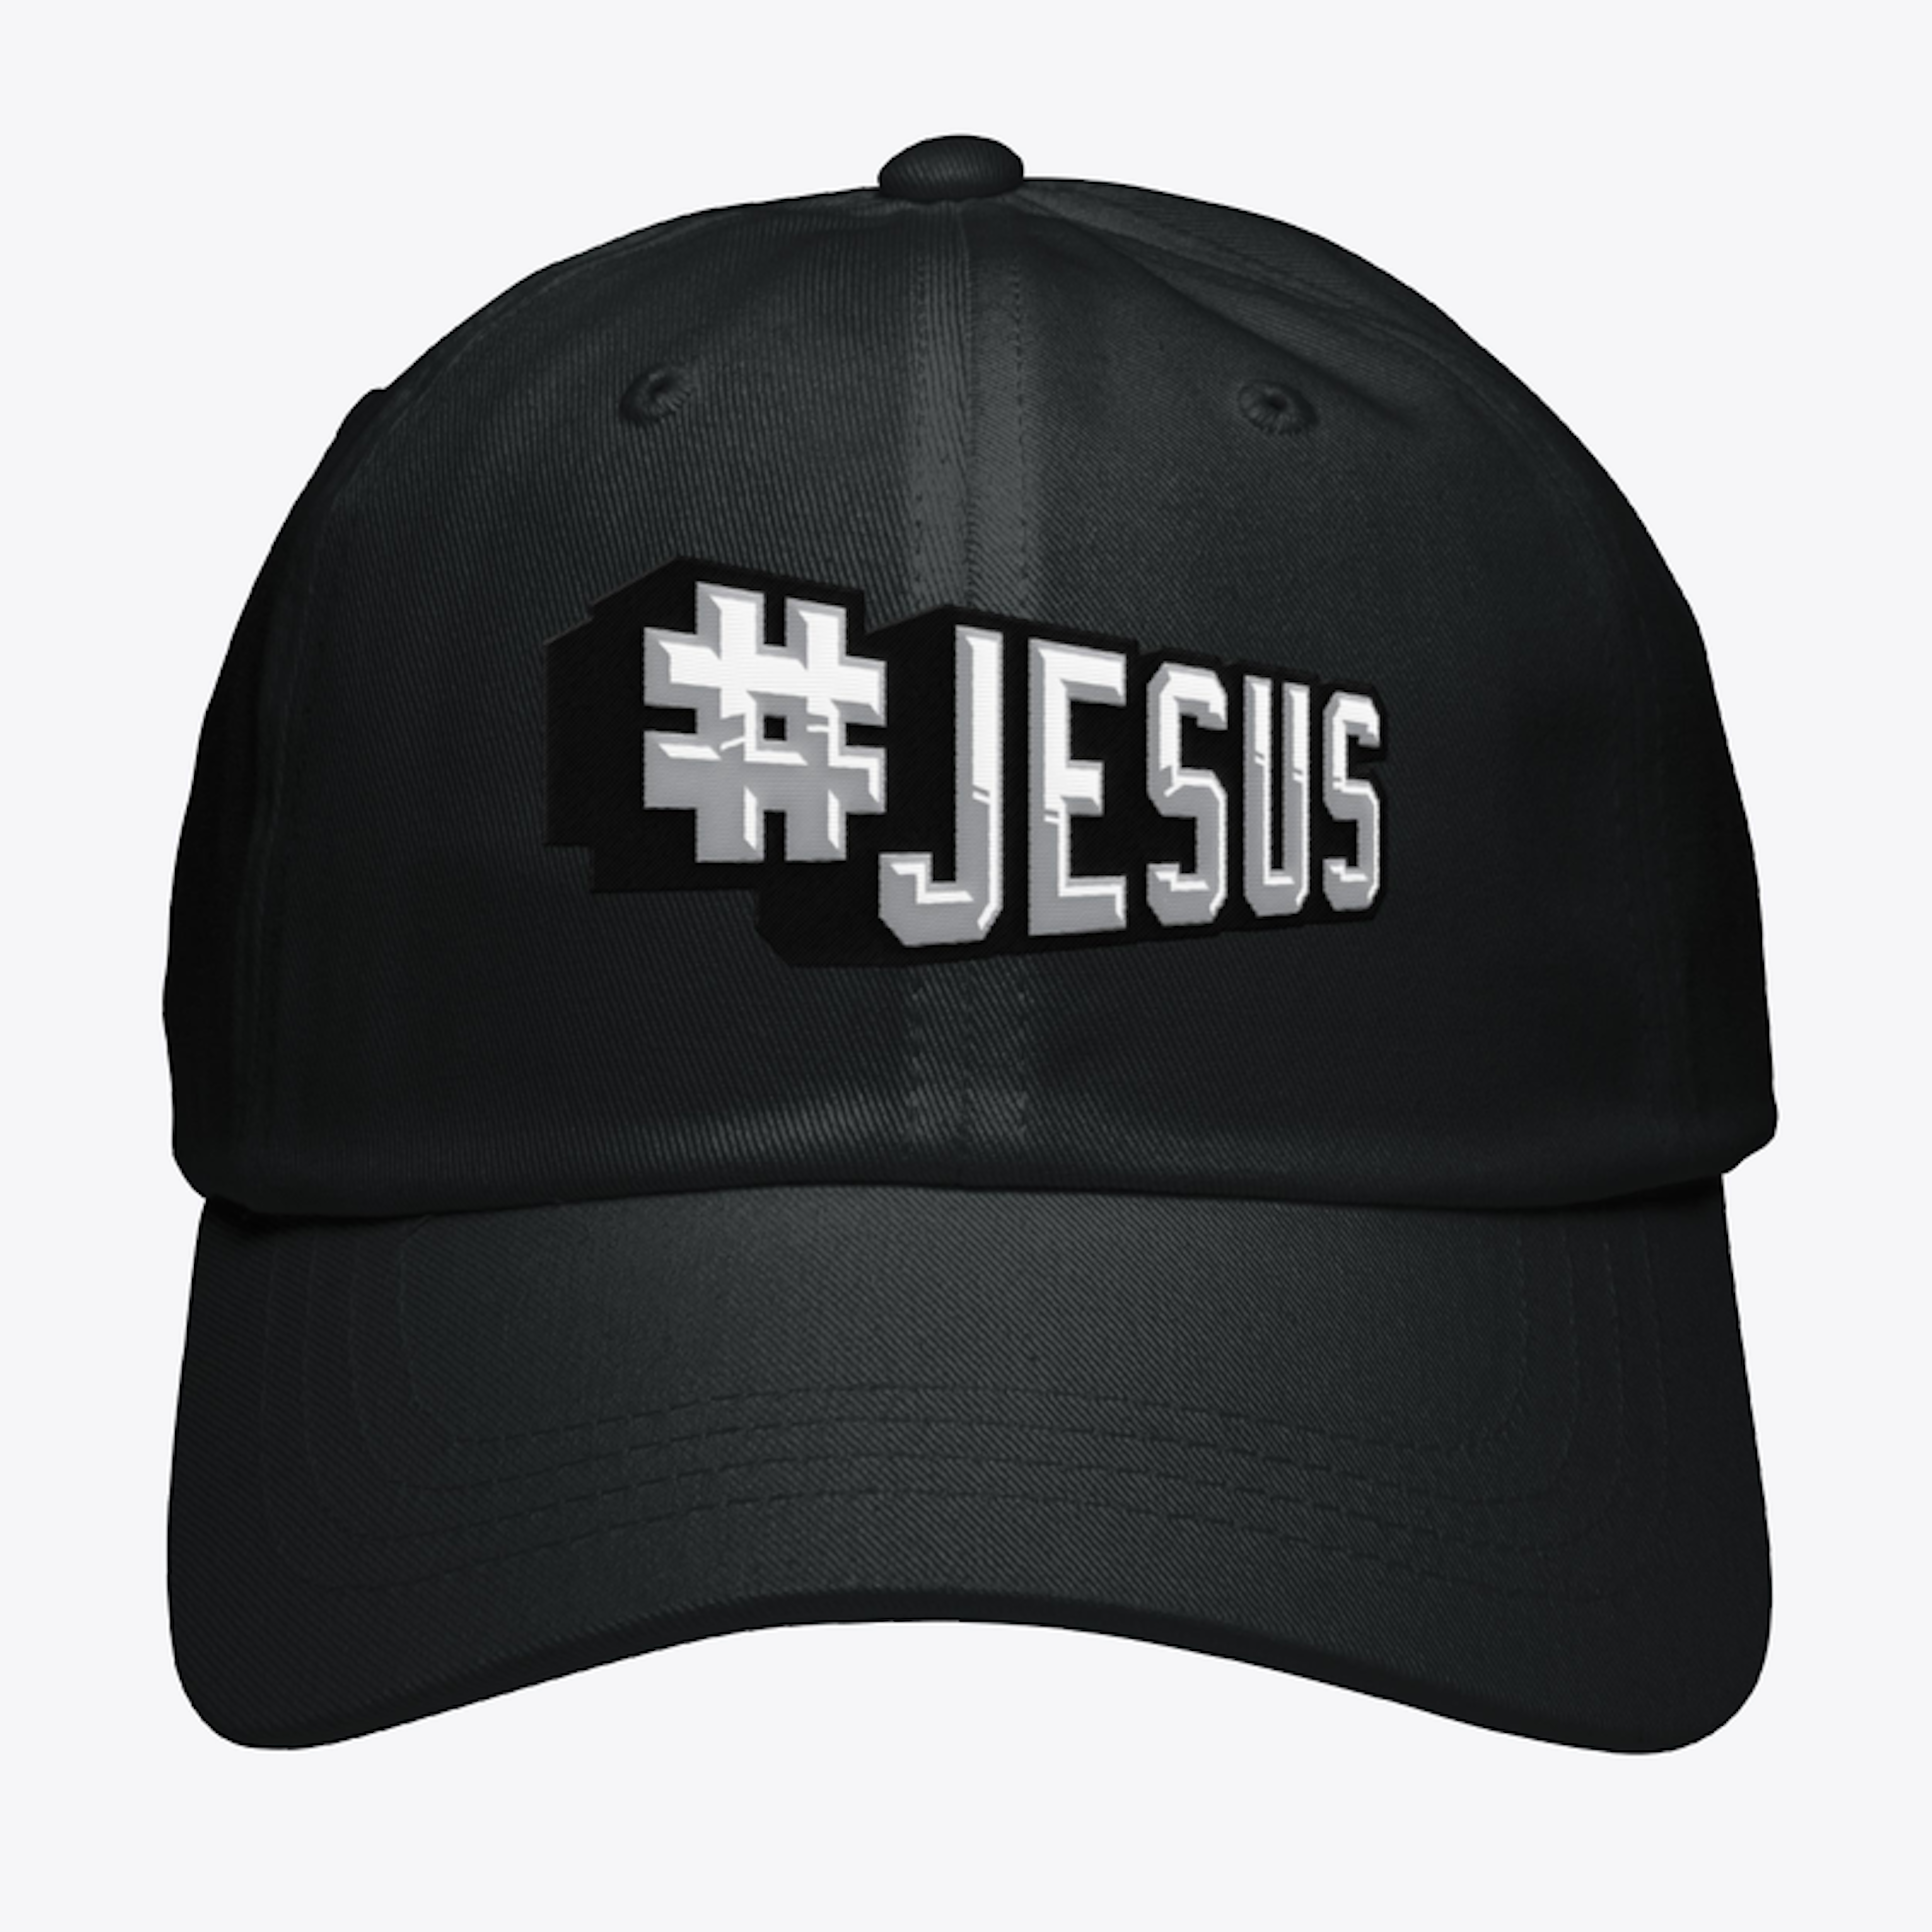 Revolution4Christ Hats  #Jesus